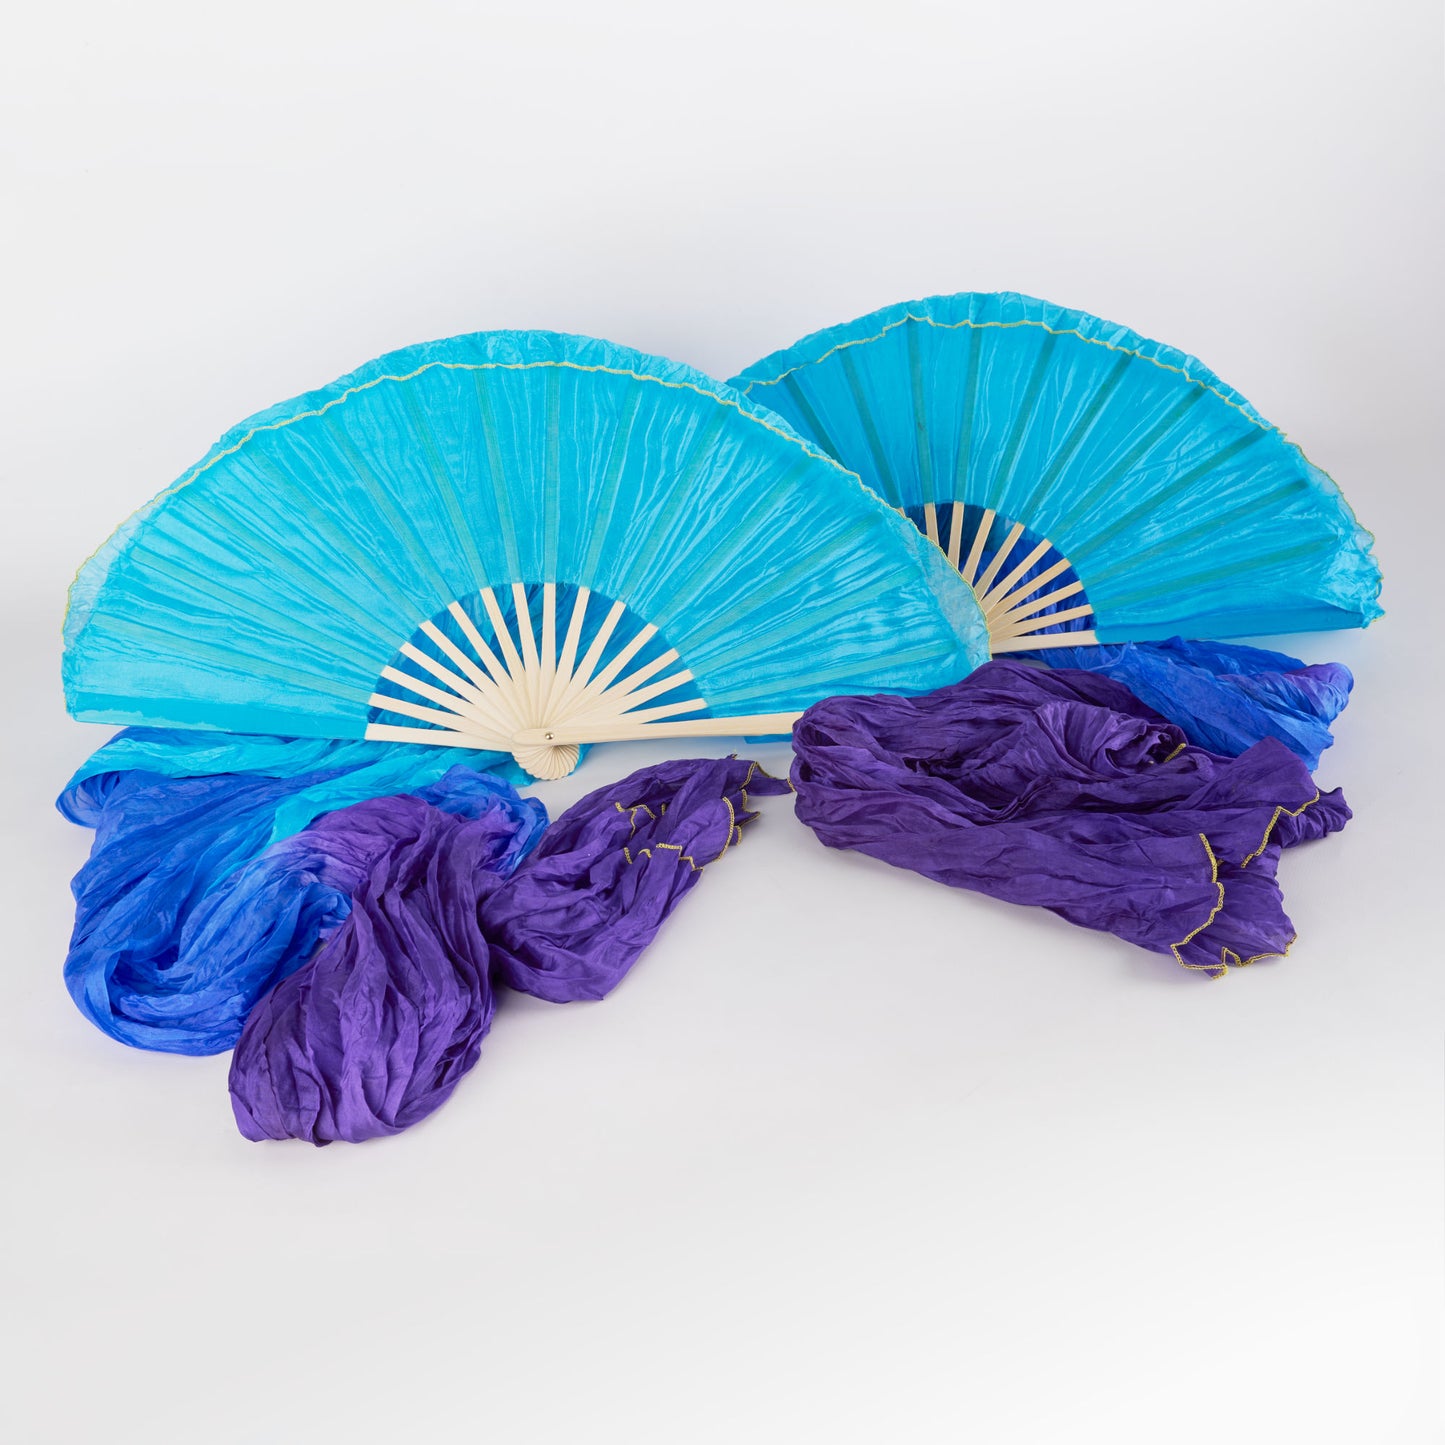 Silk Veil Fans - pair